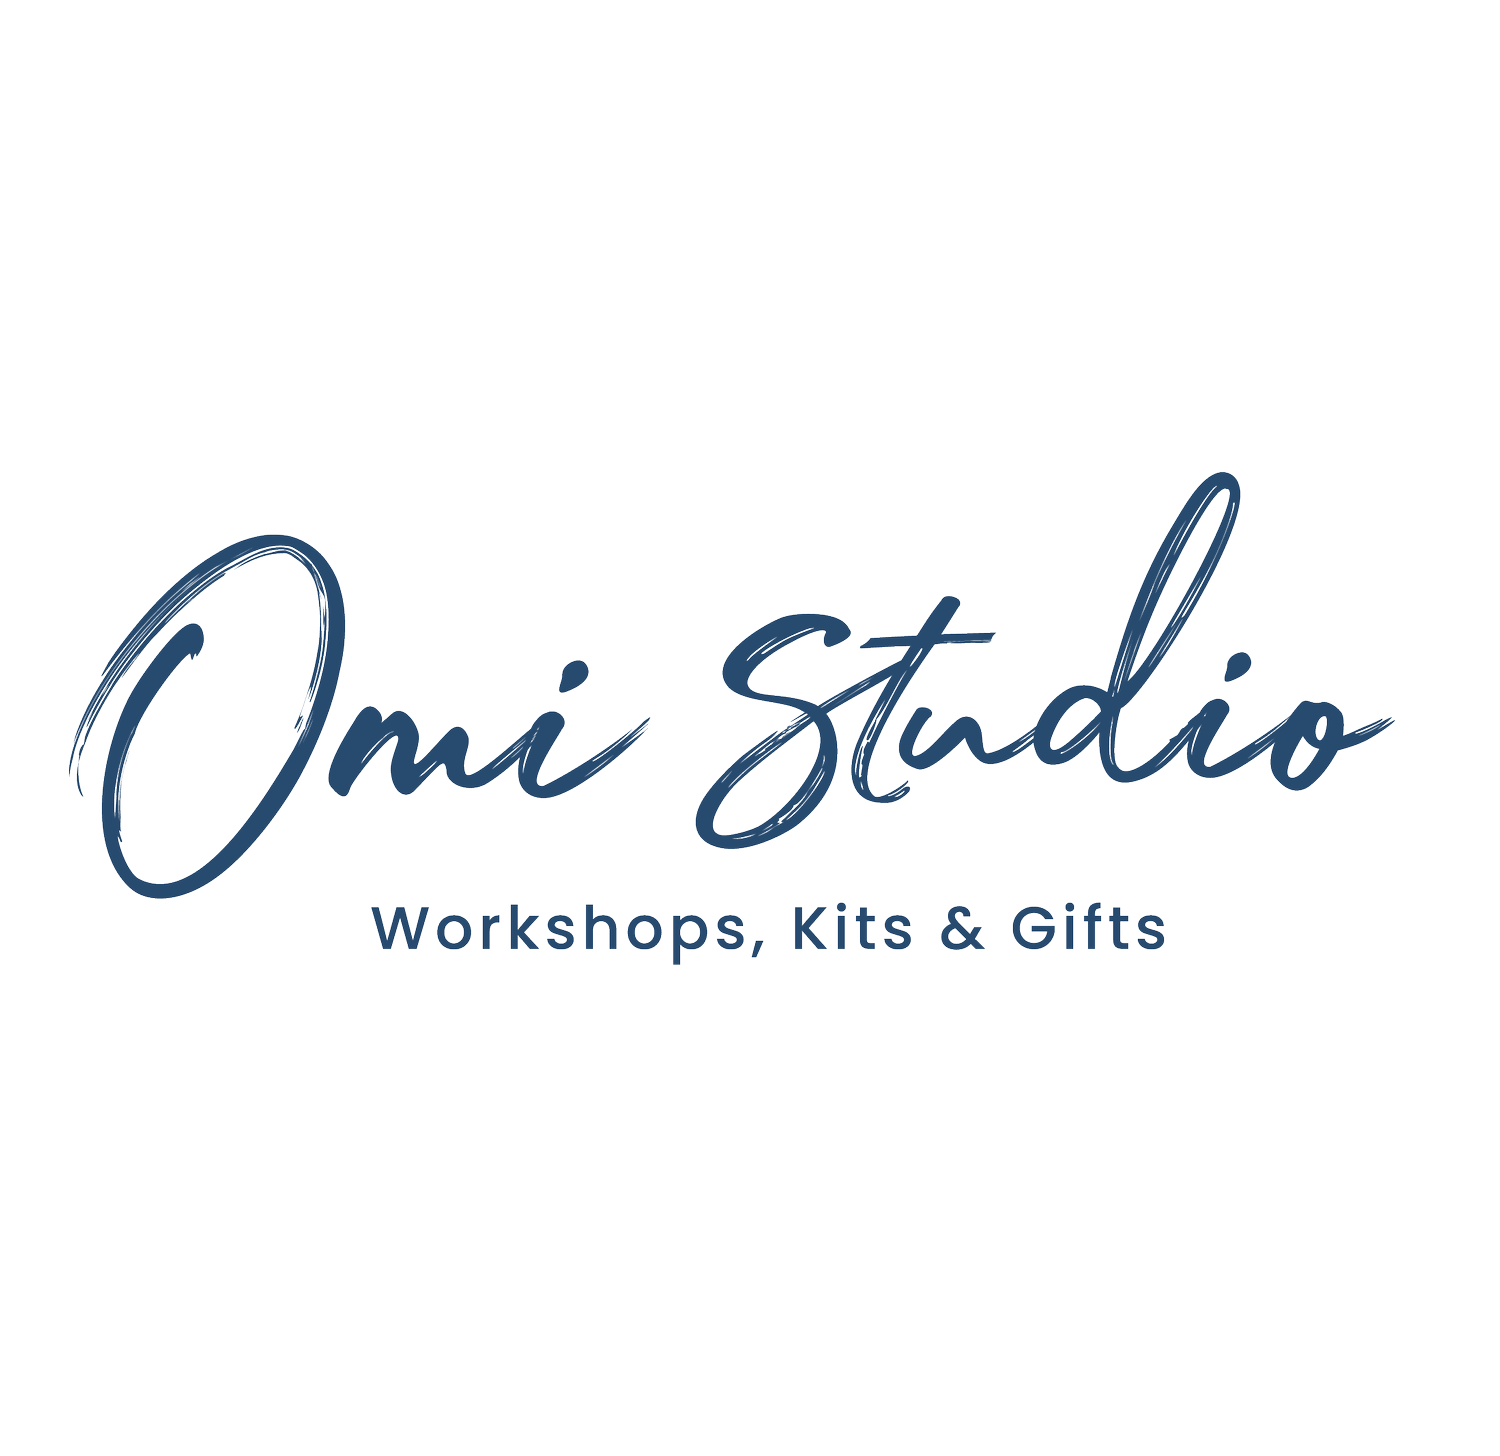 Omi Studio